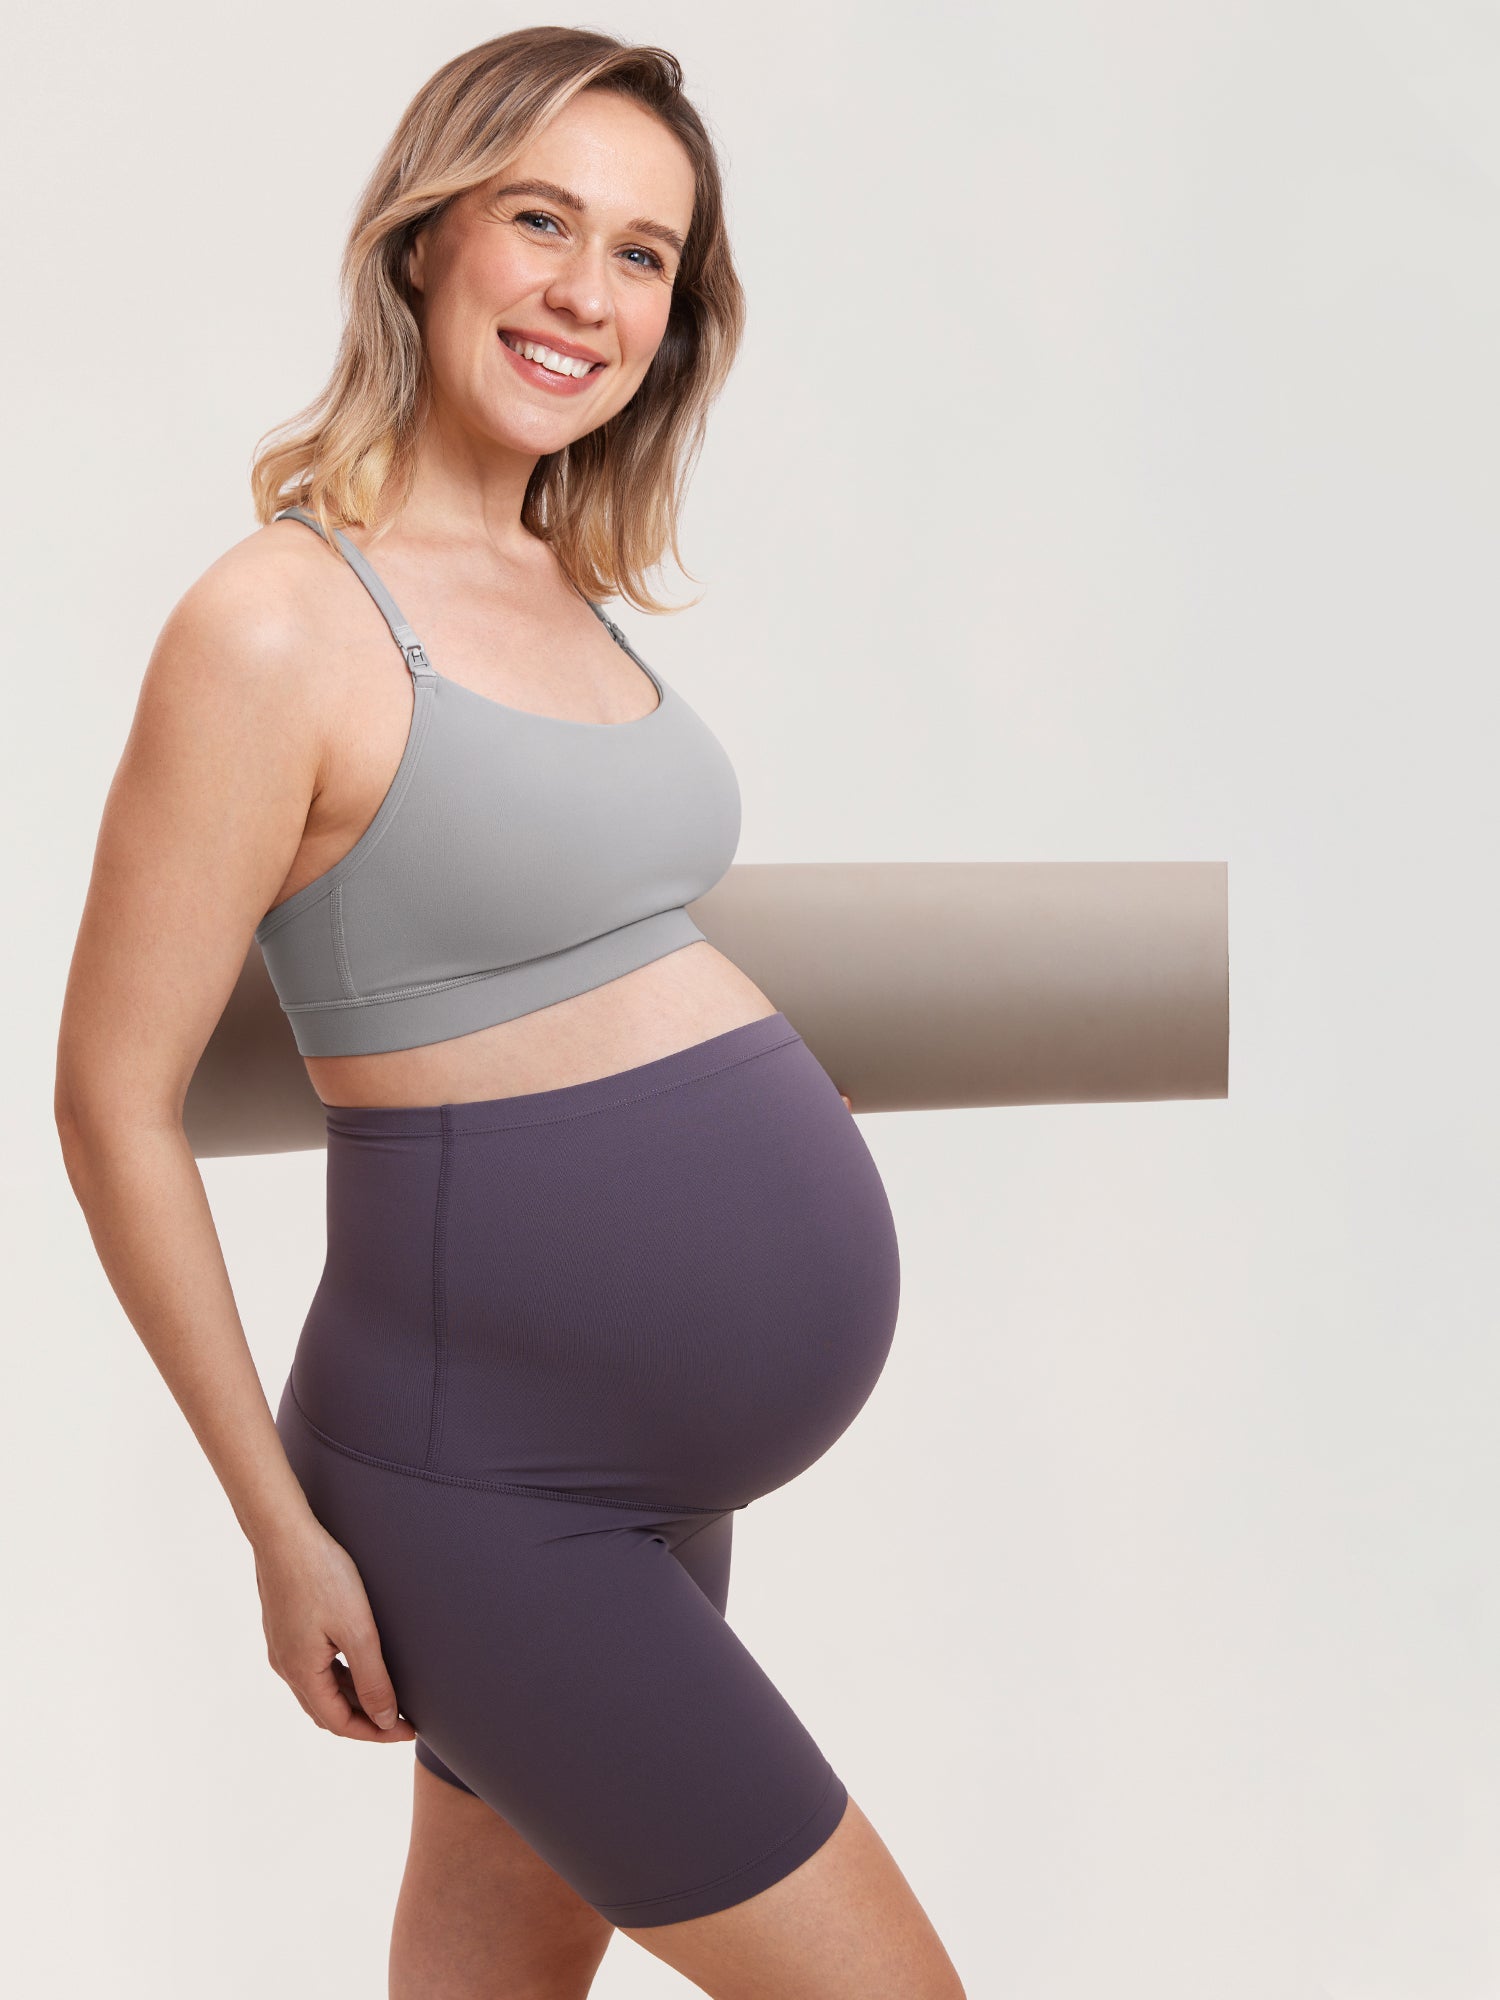 High Quality Women Underwear Bra Yoga Sports Maternity Nursing